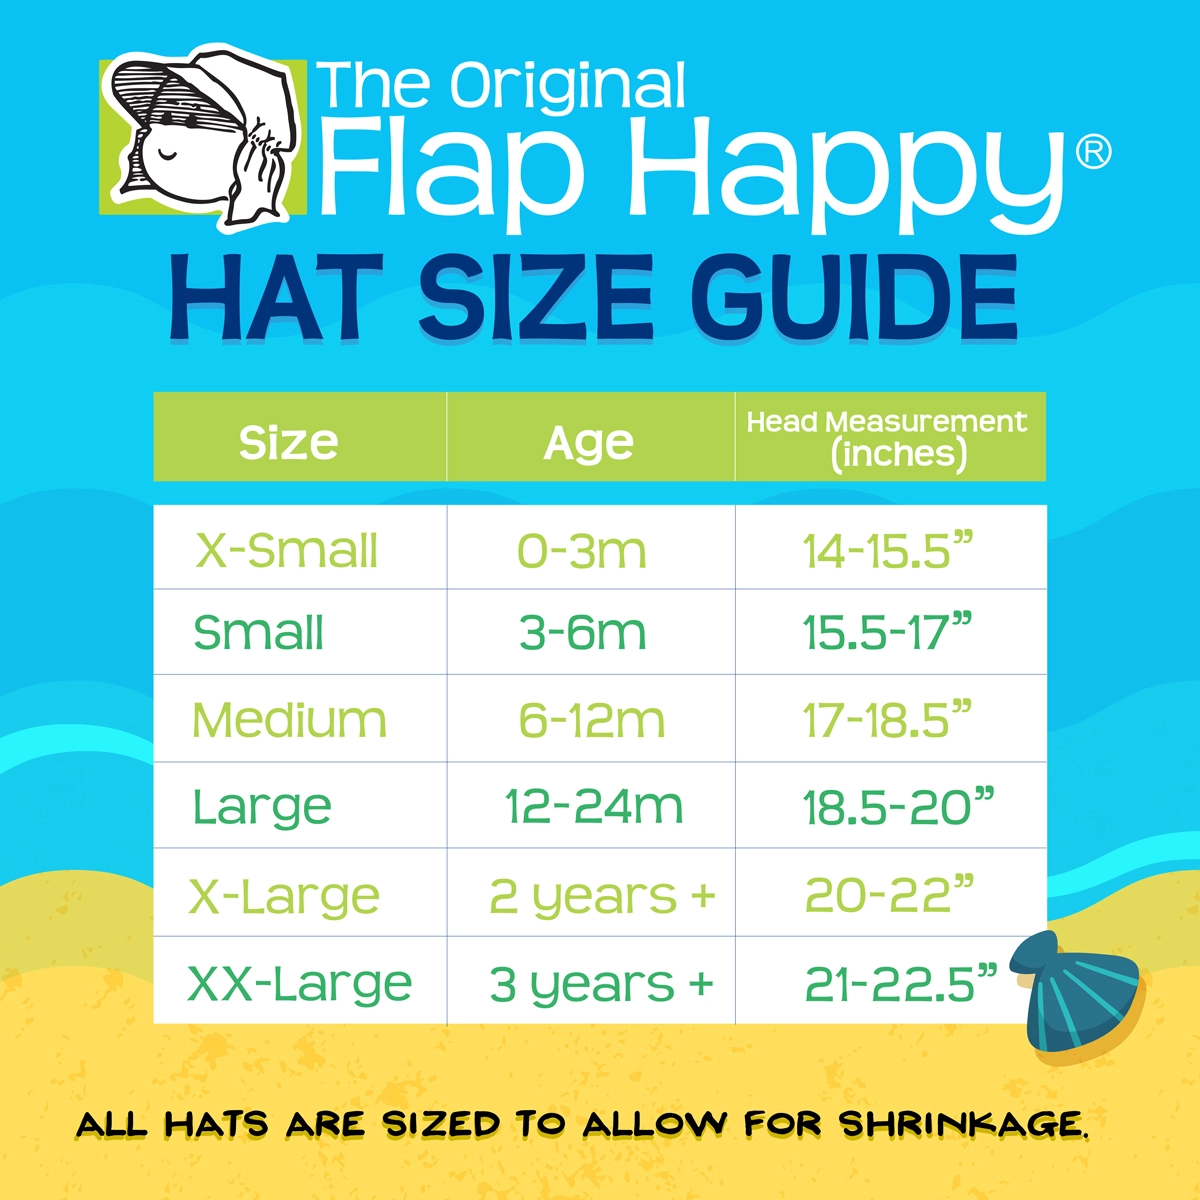 Flap Happy Original size chart